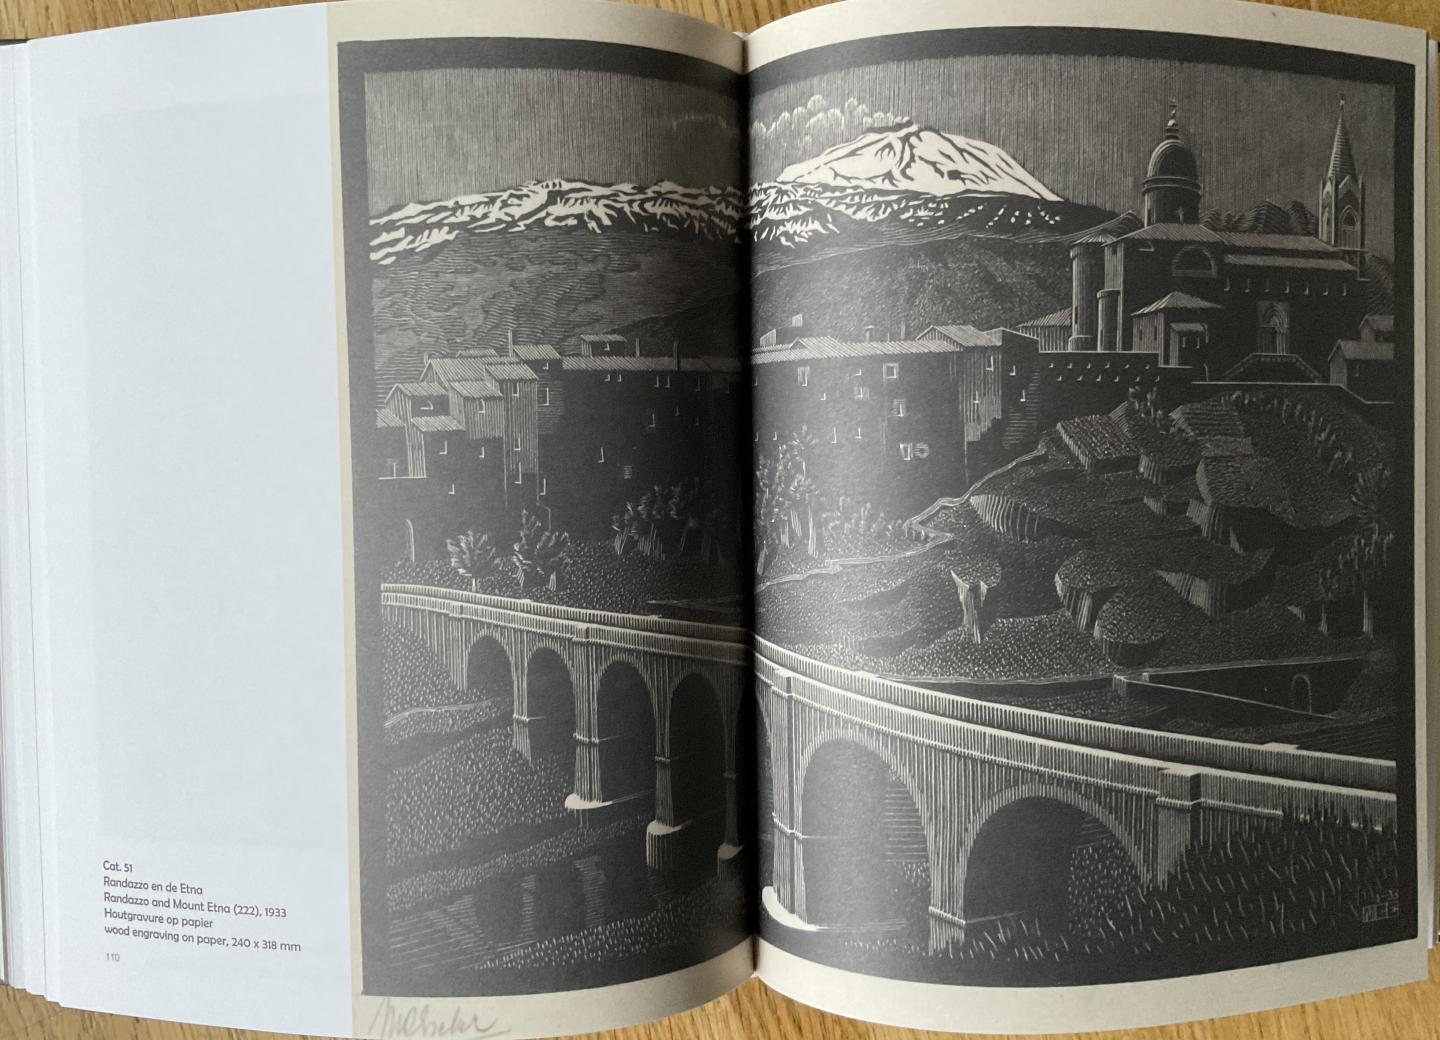 Giudiceandrea, Frederico - Escher op reis | Escher’s journey